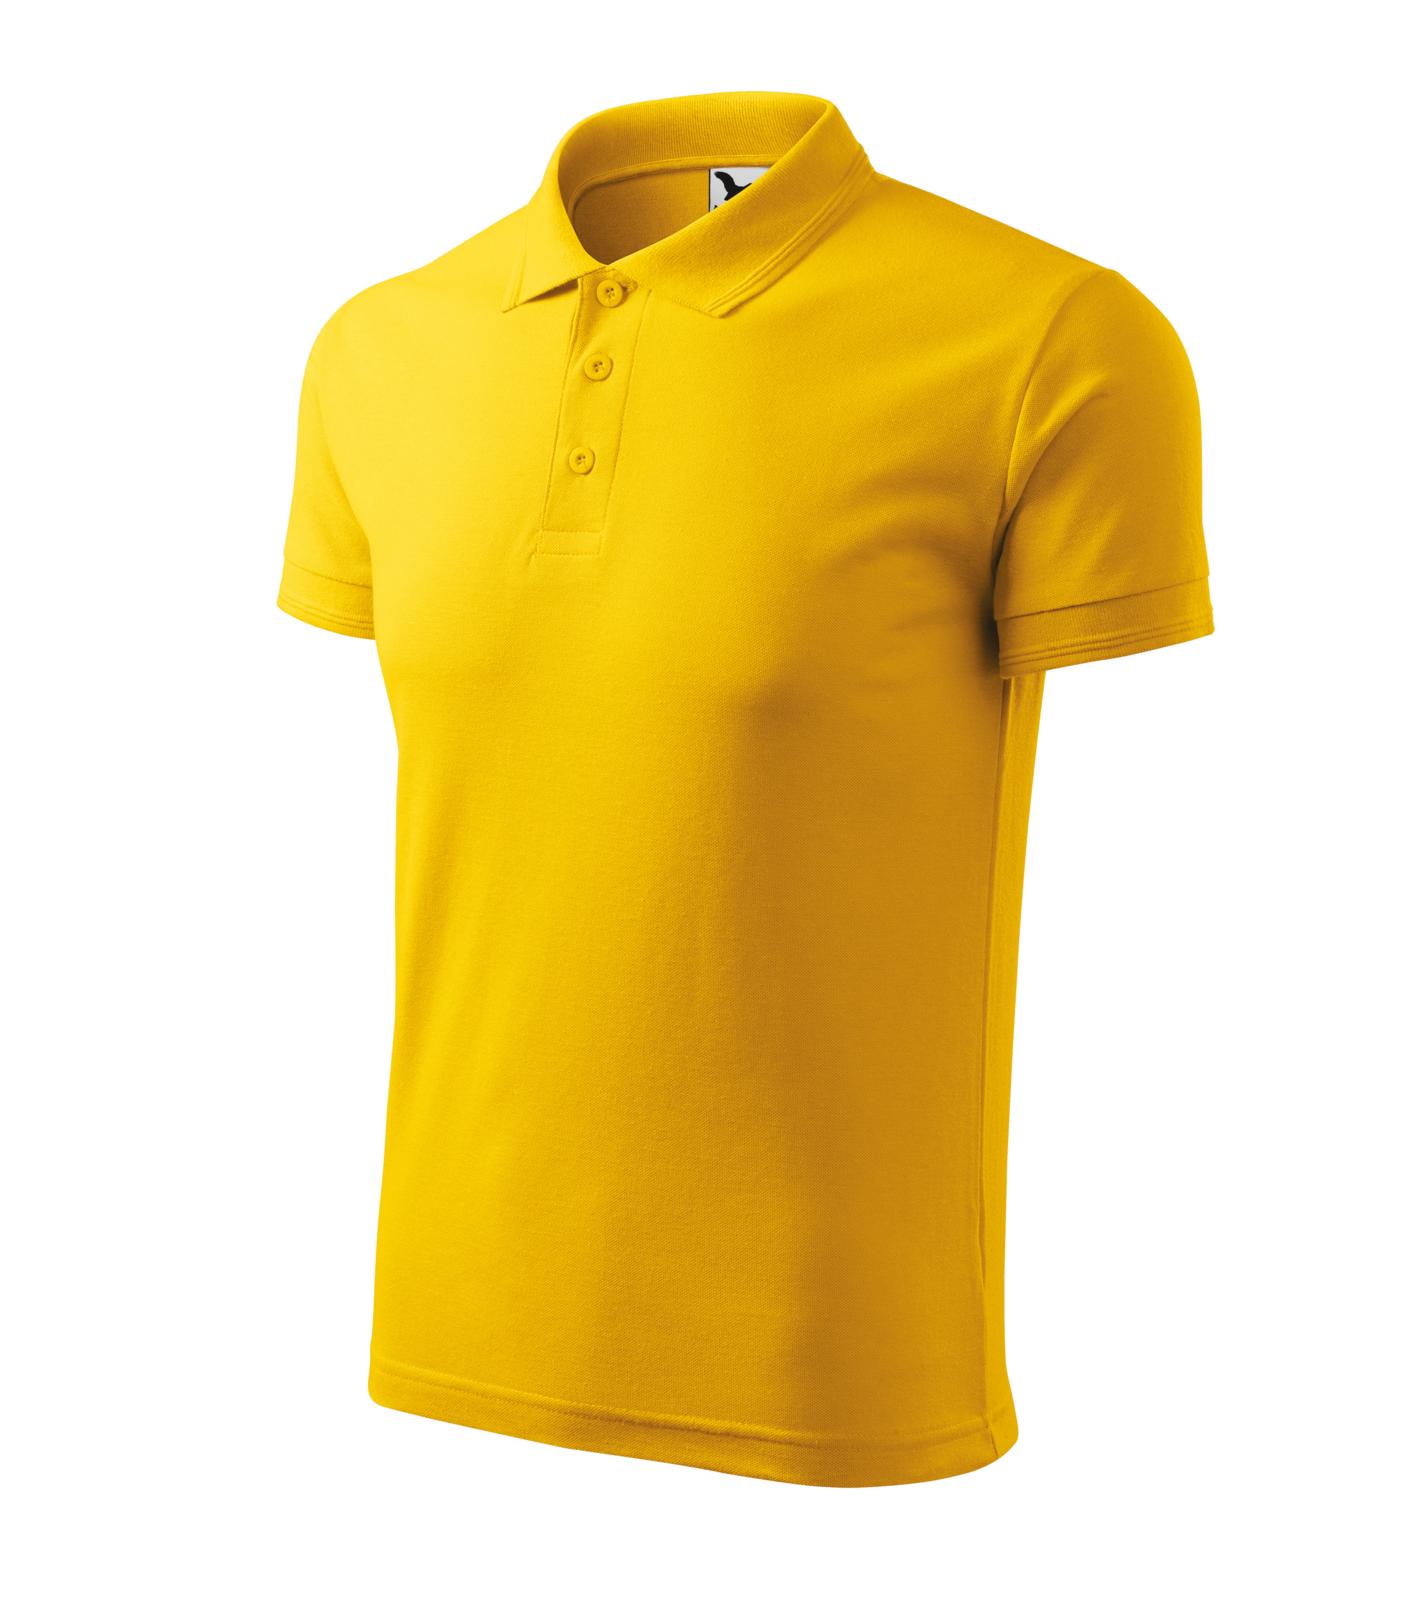 Pique Polo Polokošile pánská Barva: žlutá, Velikost: S